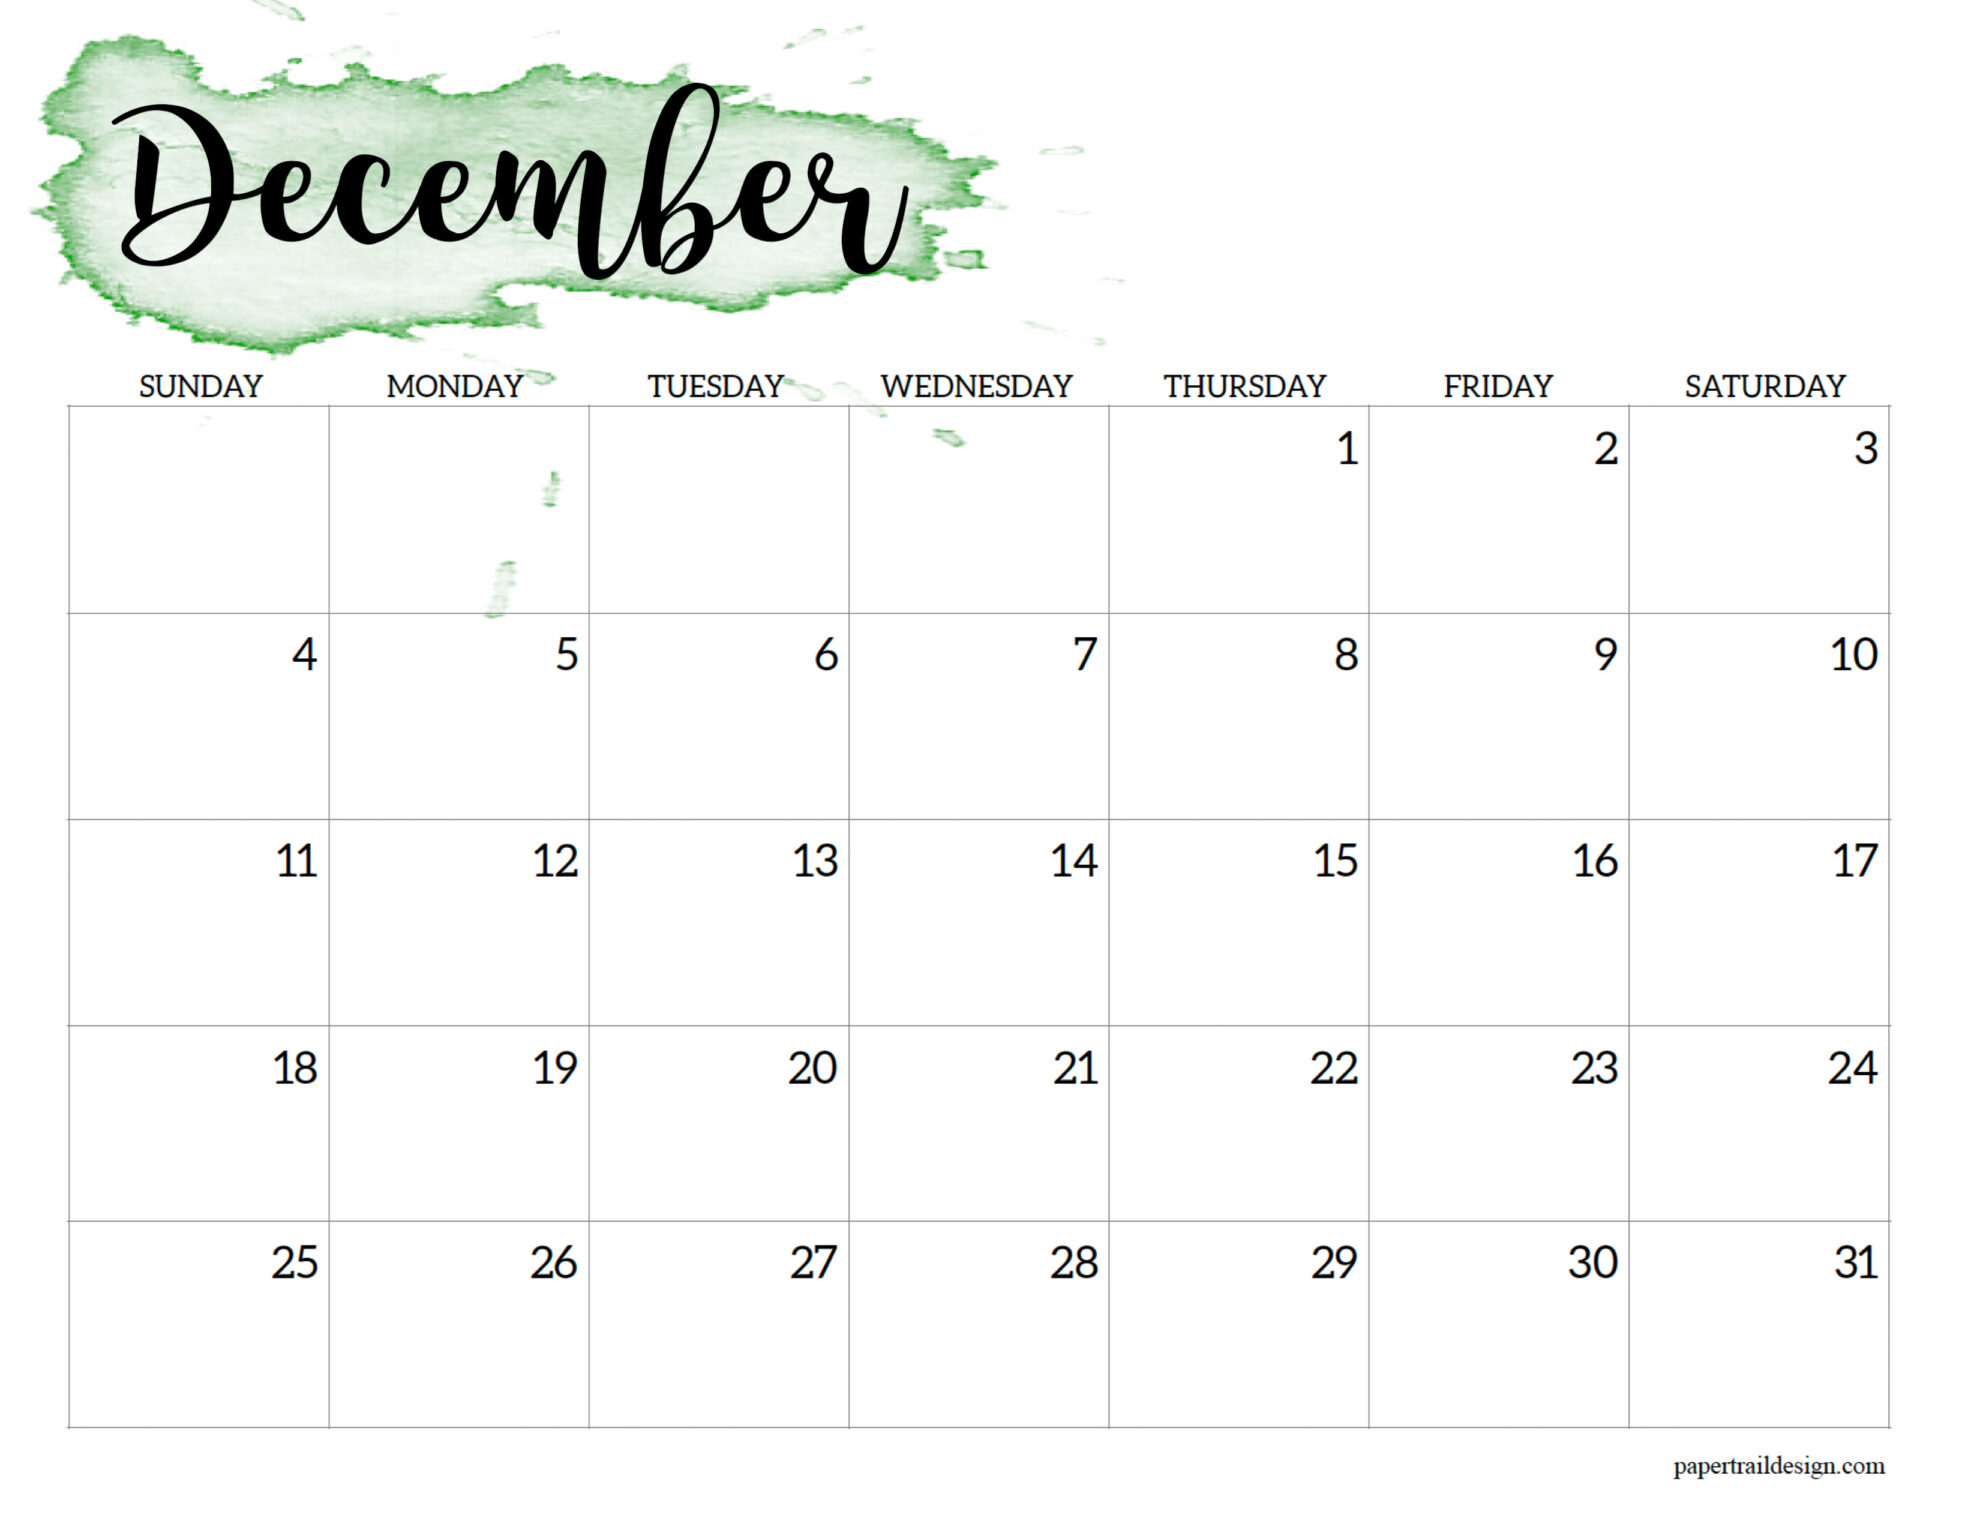 December 2022 Calendar Template 2022 Calendar Printable - Watercolor - Paper Trail Design